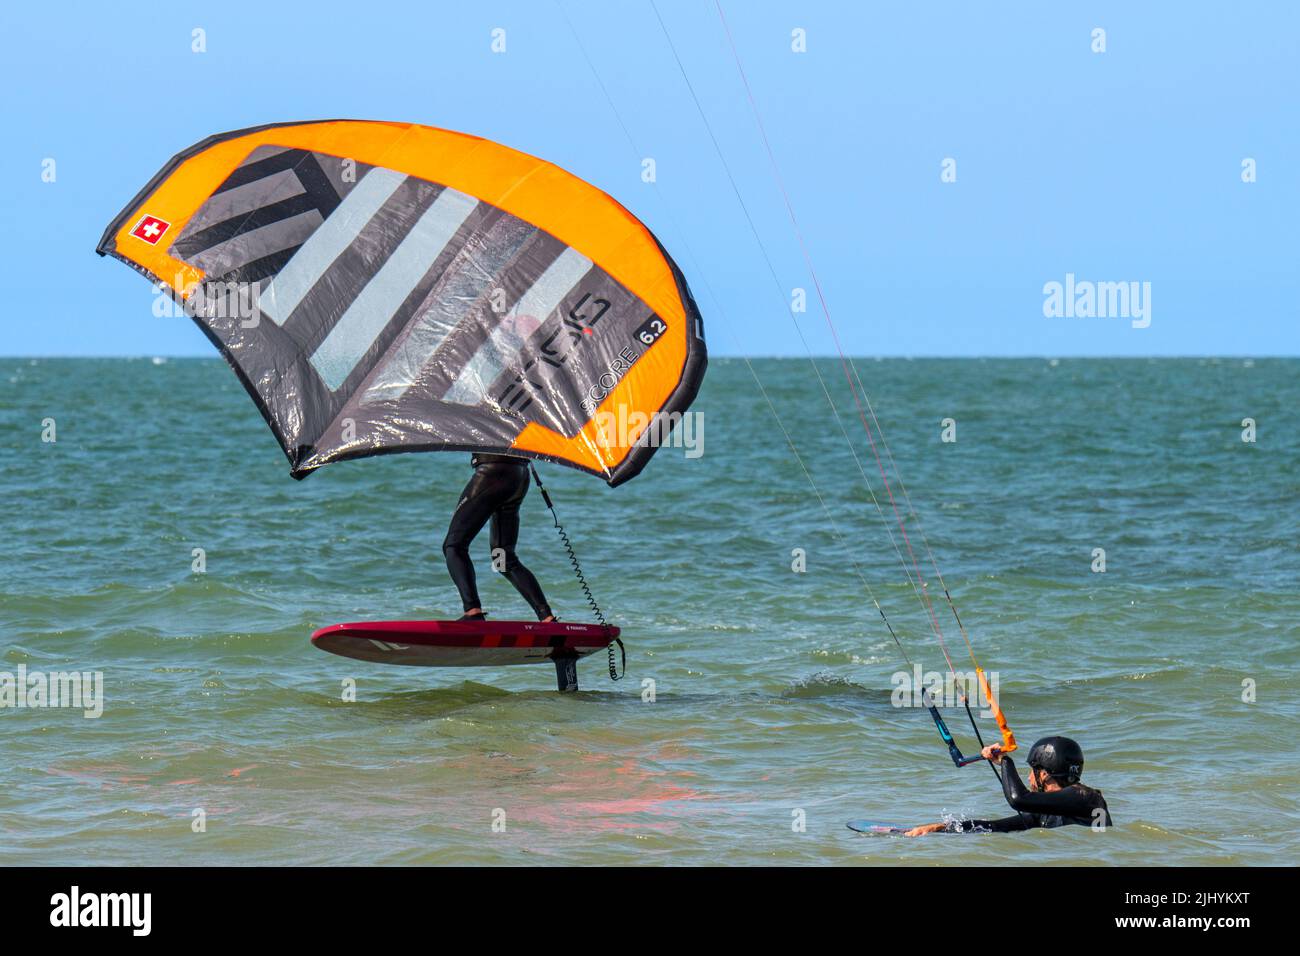 Kiteboarder / Kitesurfer und Wingboarder / Wing Boarder auf Foilboard / Hydrofoil Board Surfen mit aufblasbarem Flügel an der Nordsee Stockfoto